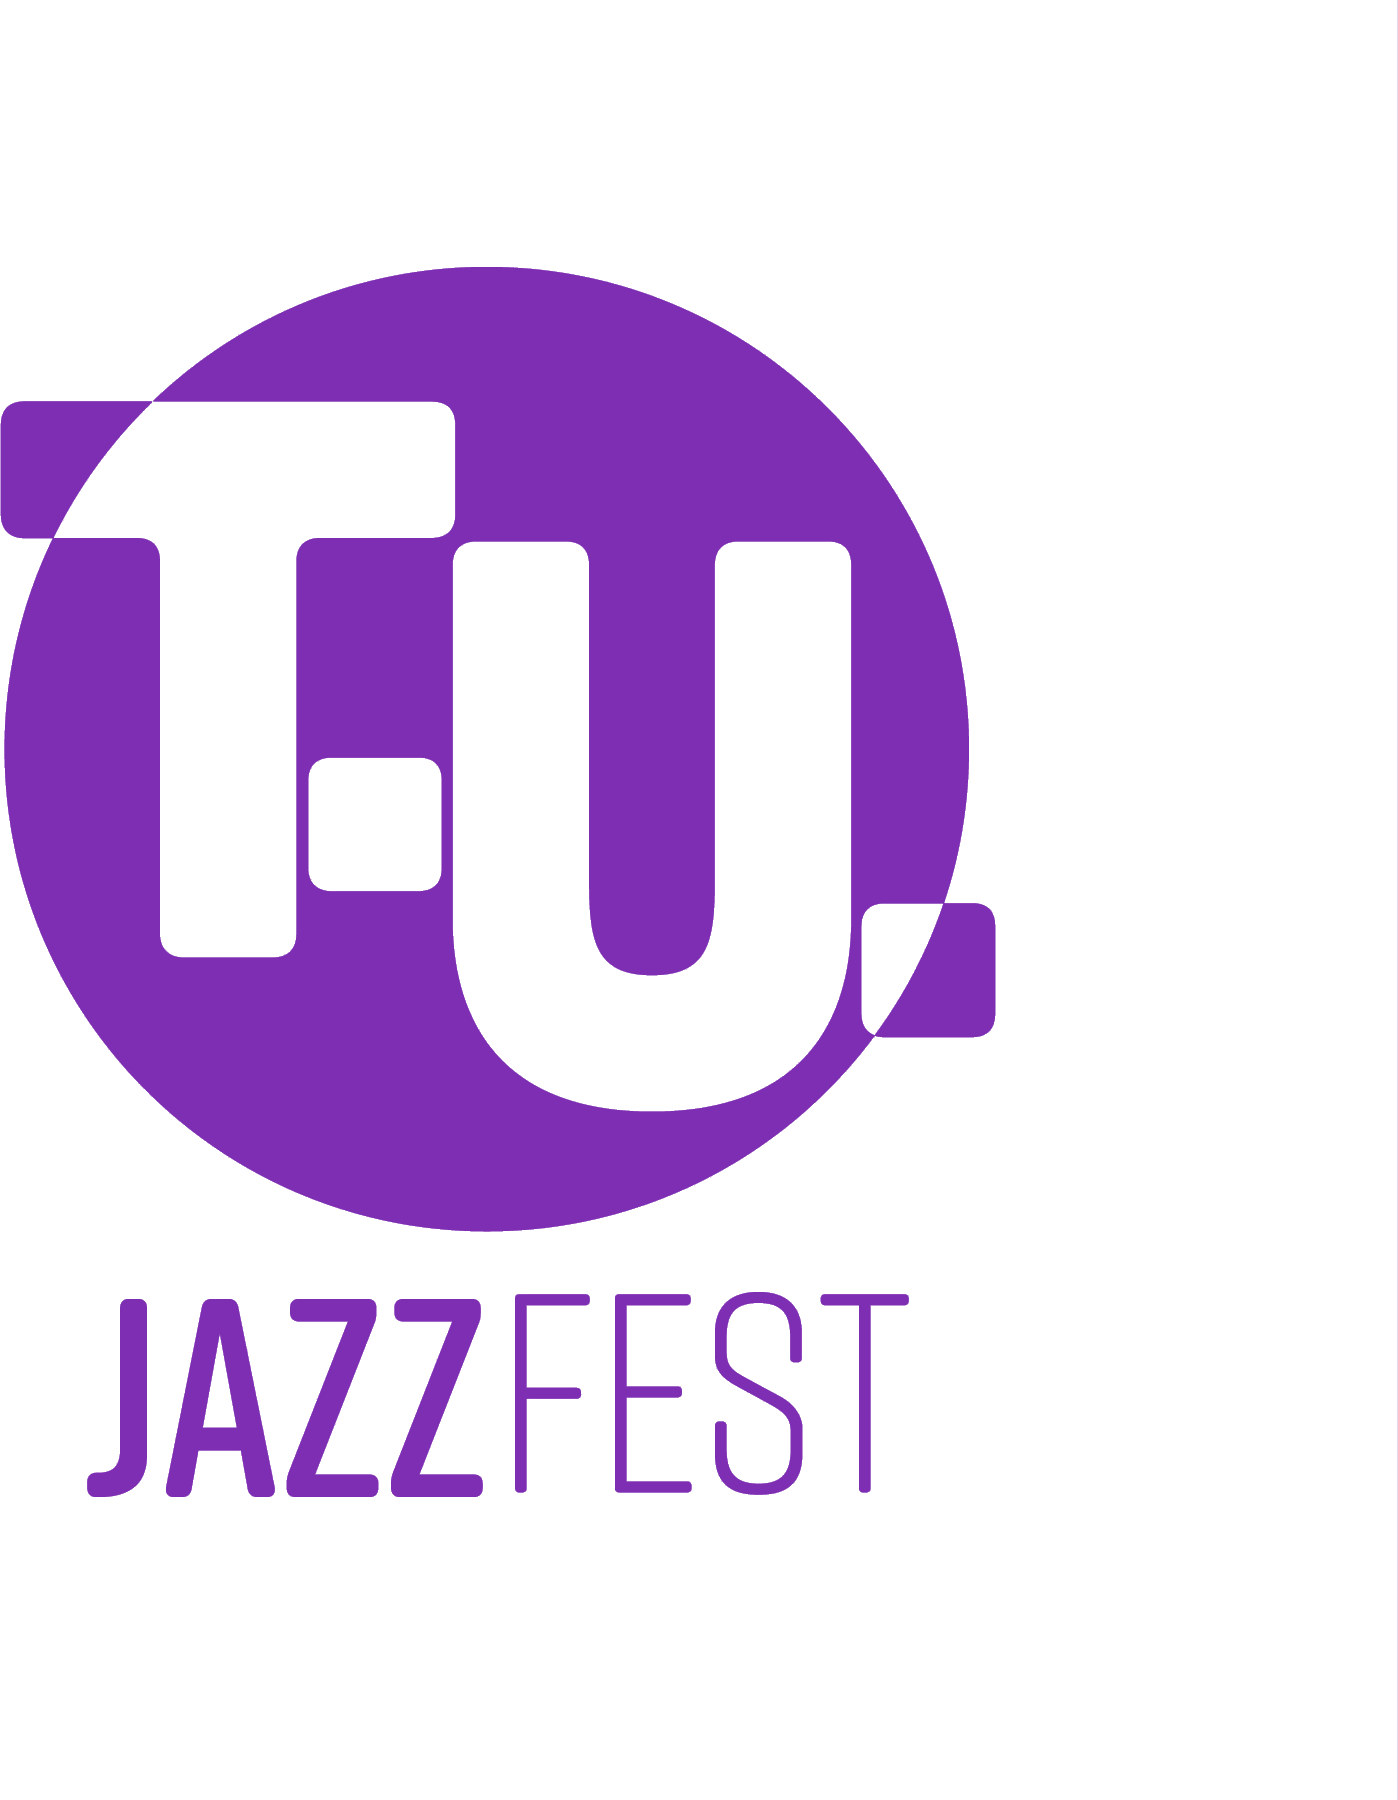 TUJF logo-purple (2).png